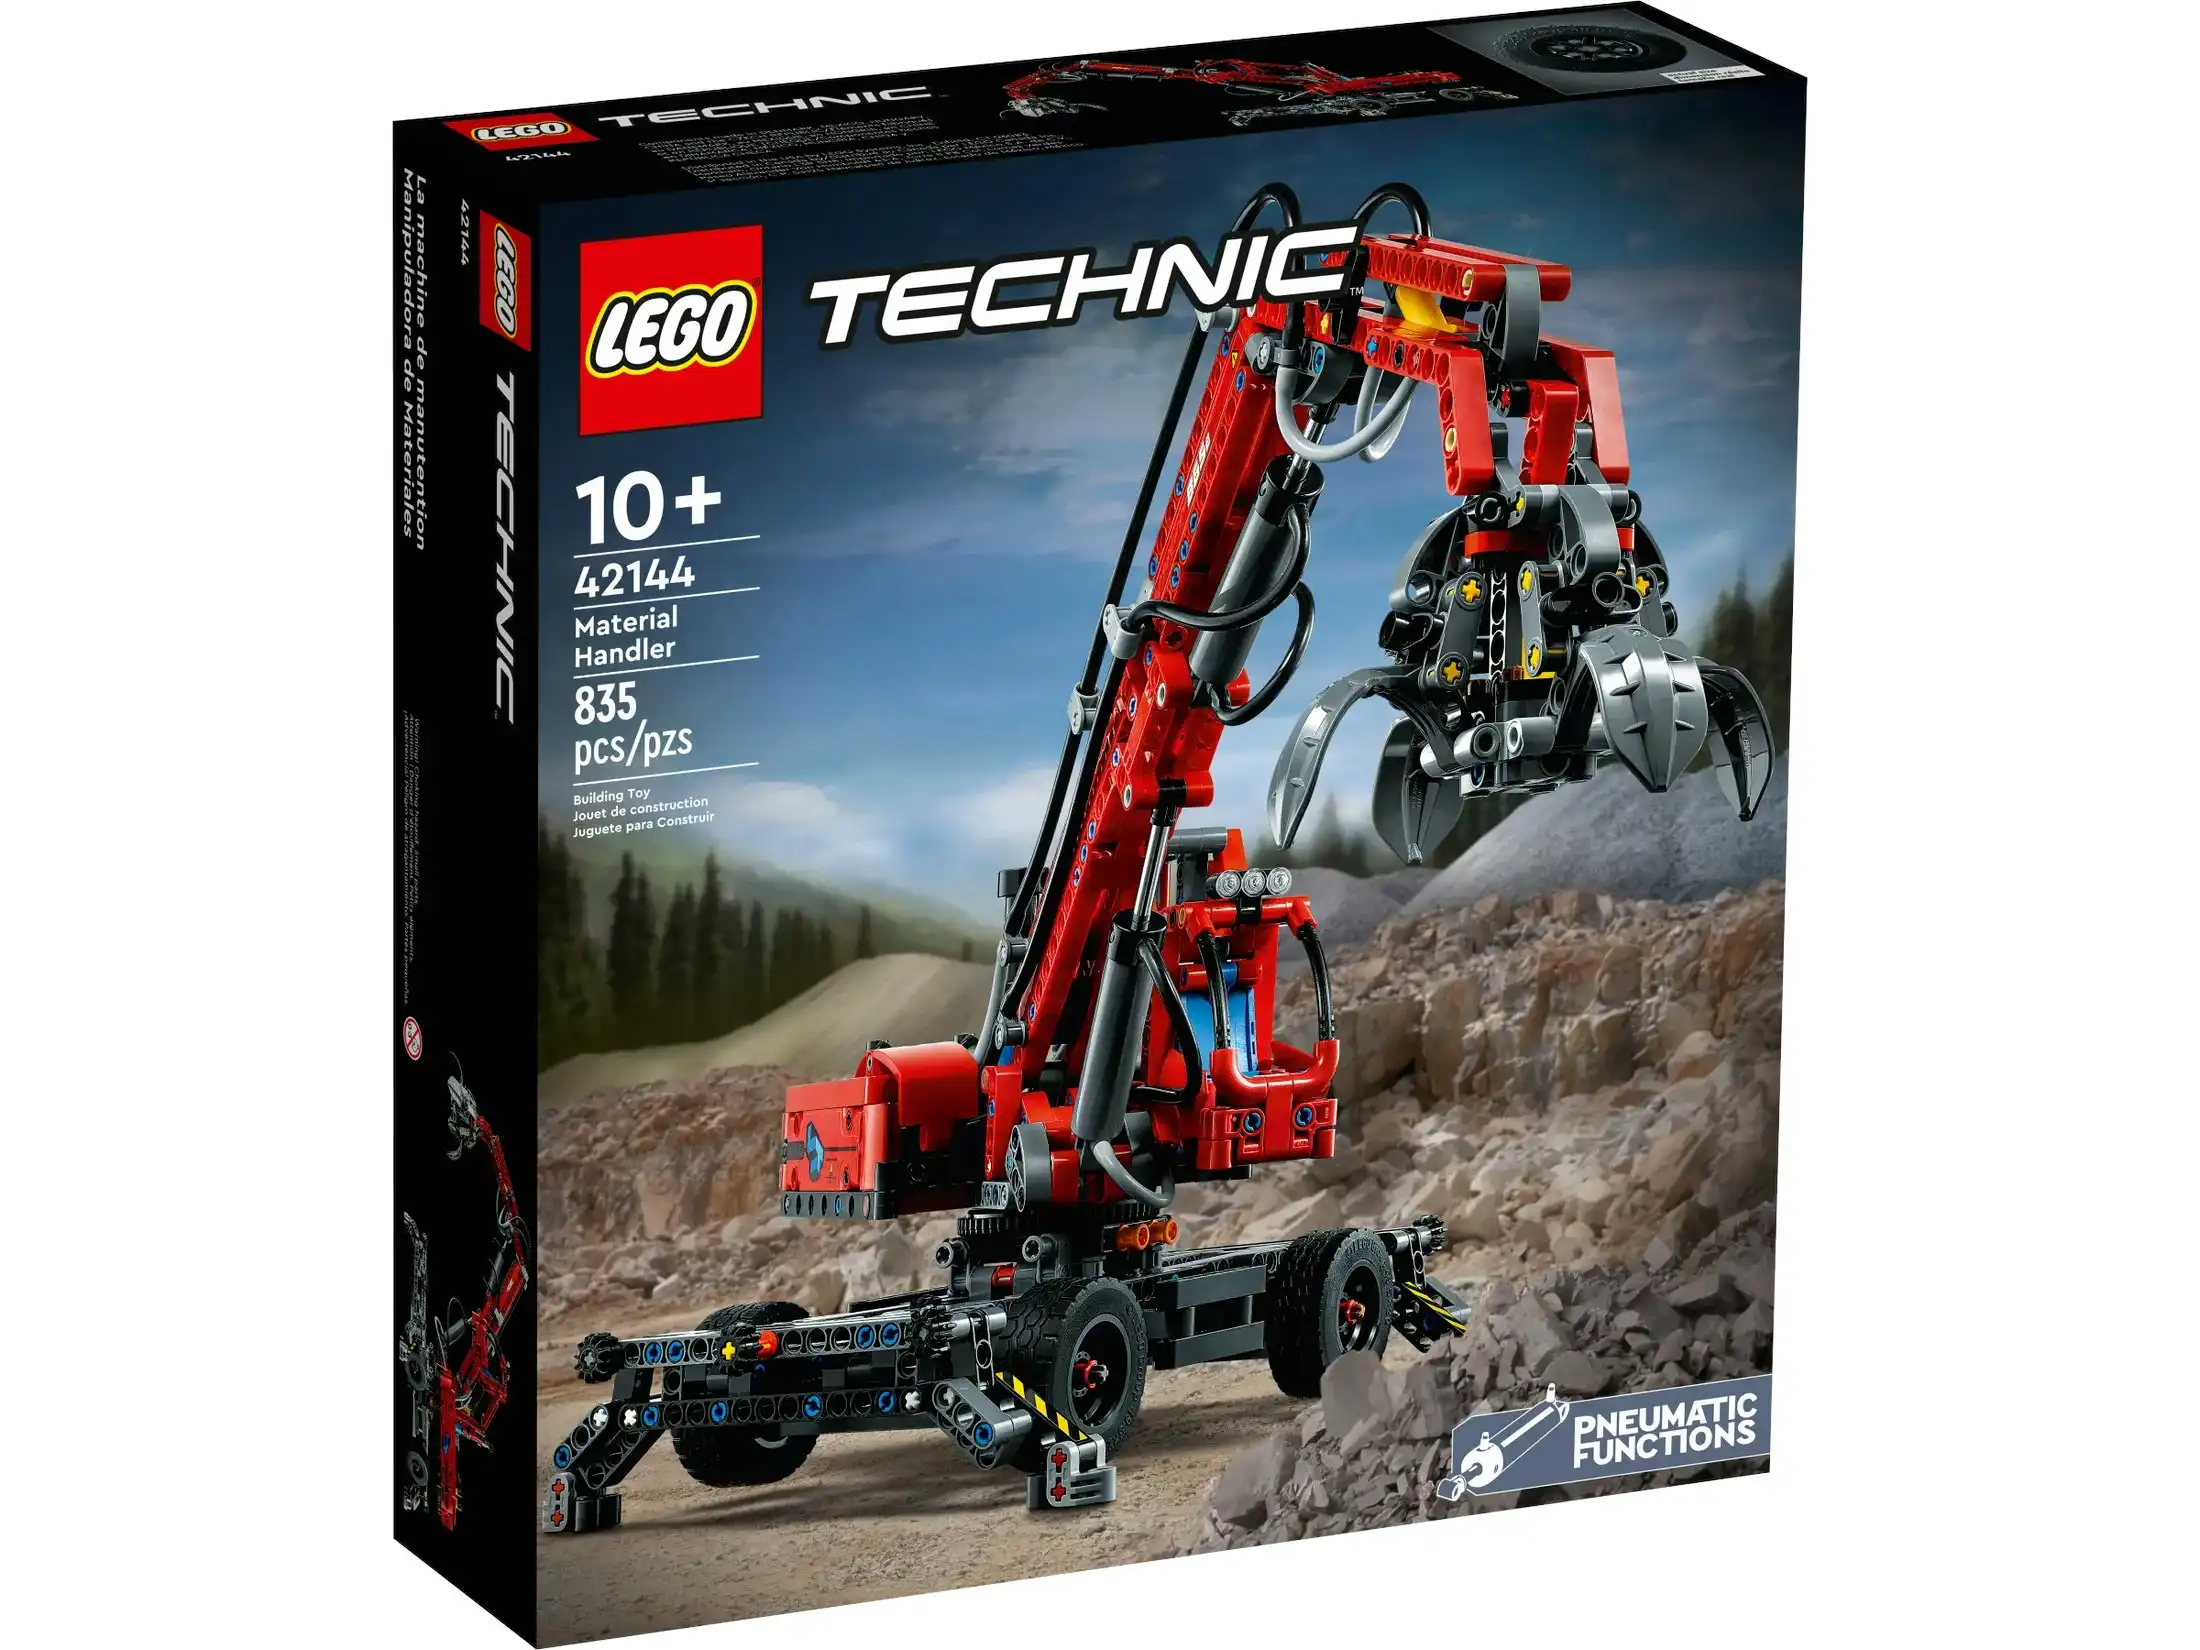 LEGO 42144 Material Handler - Technic